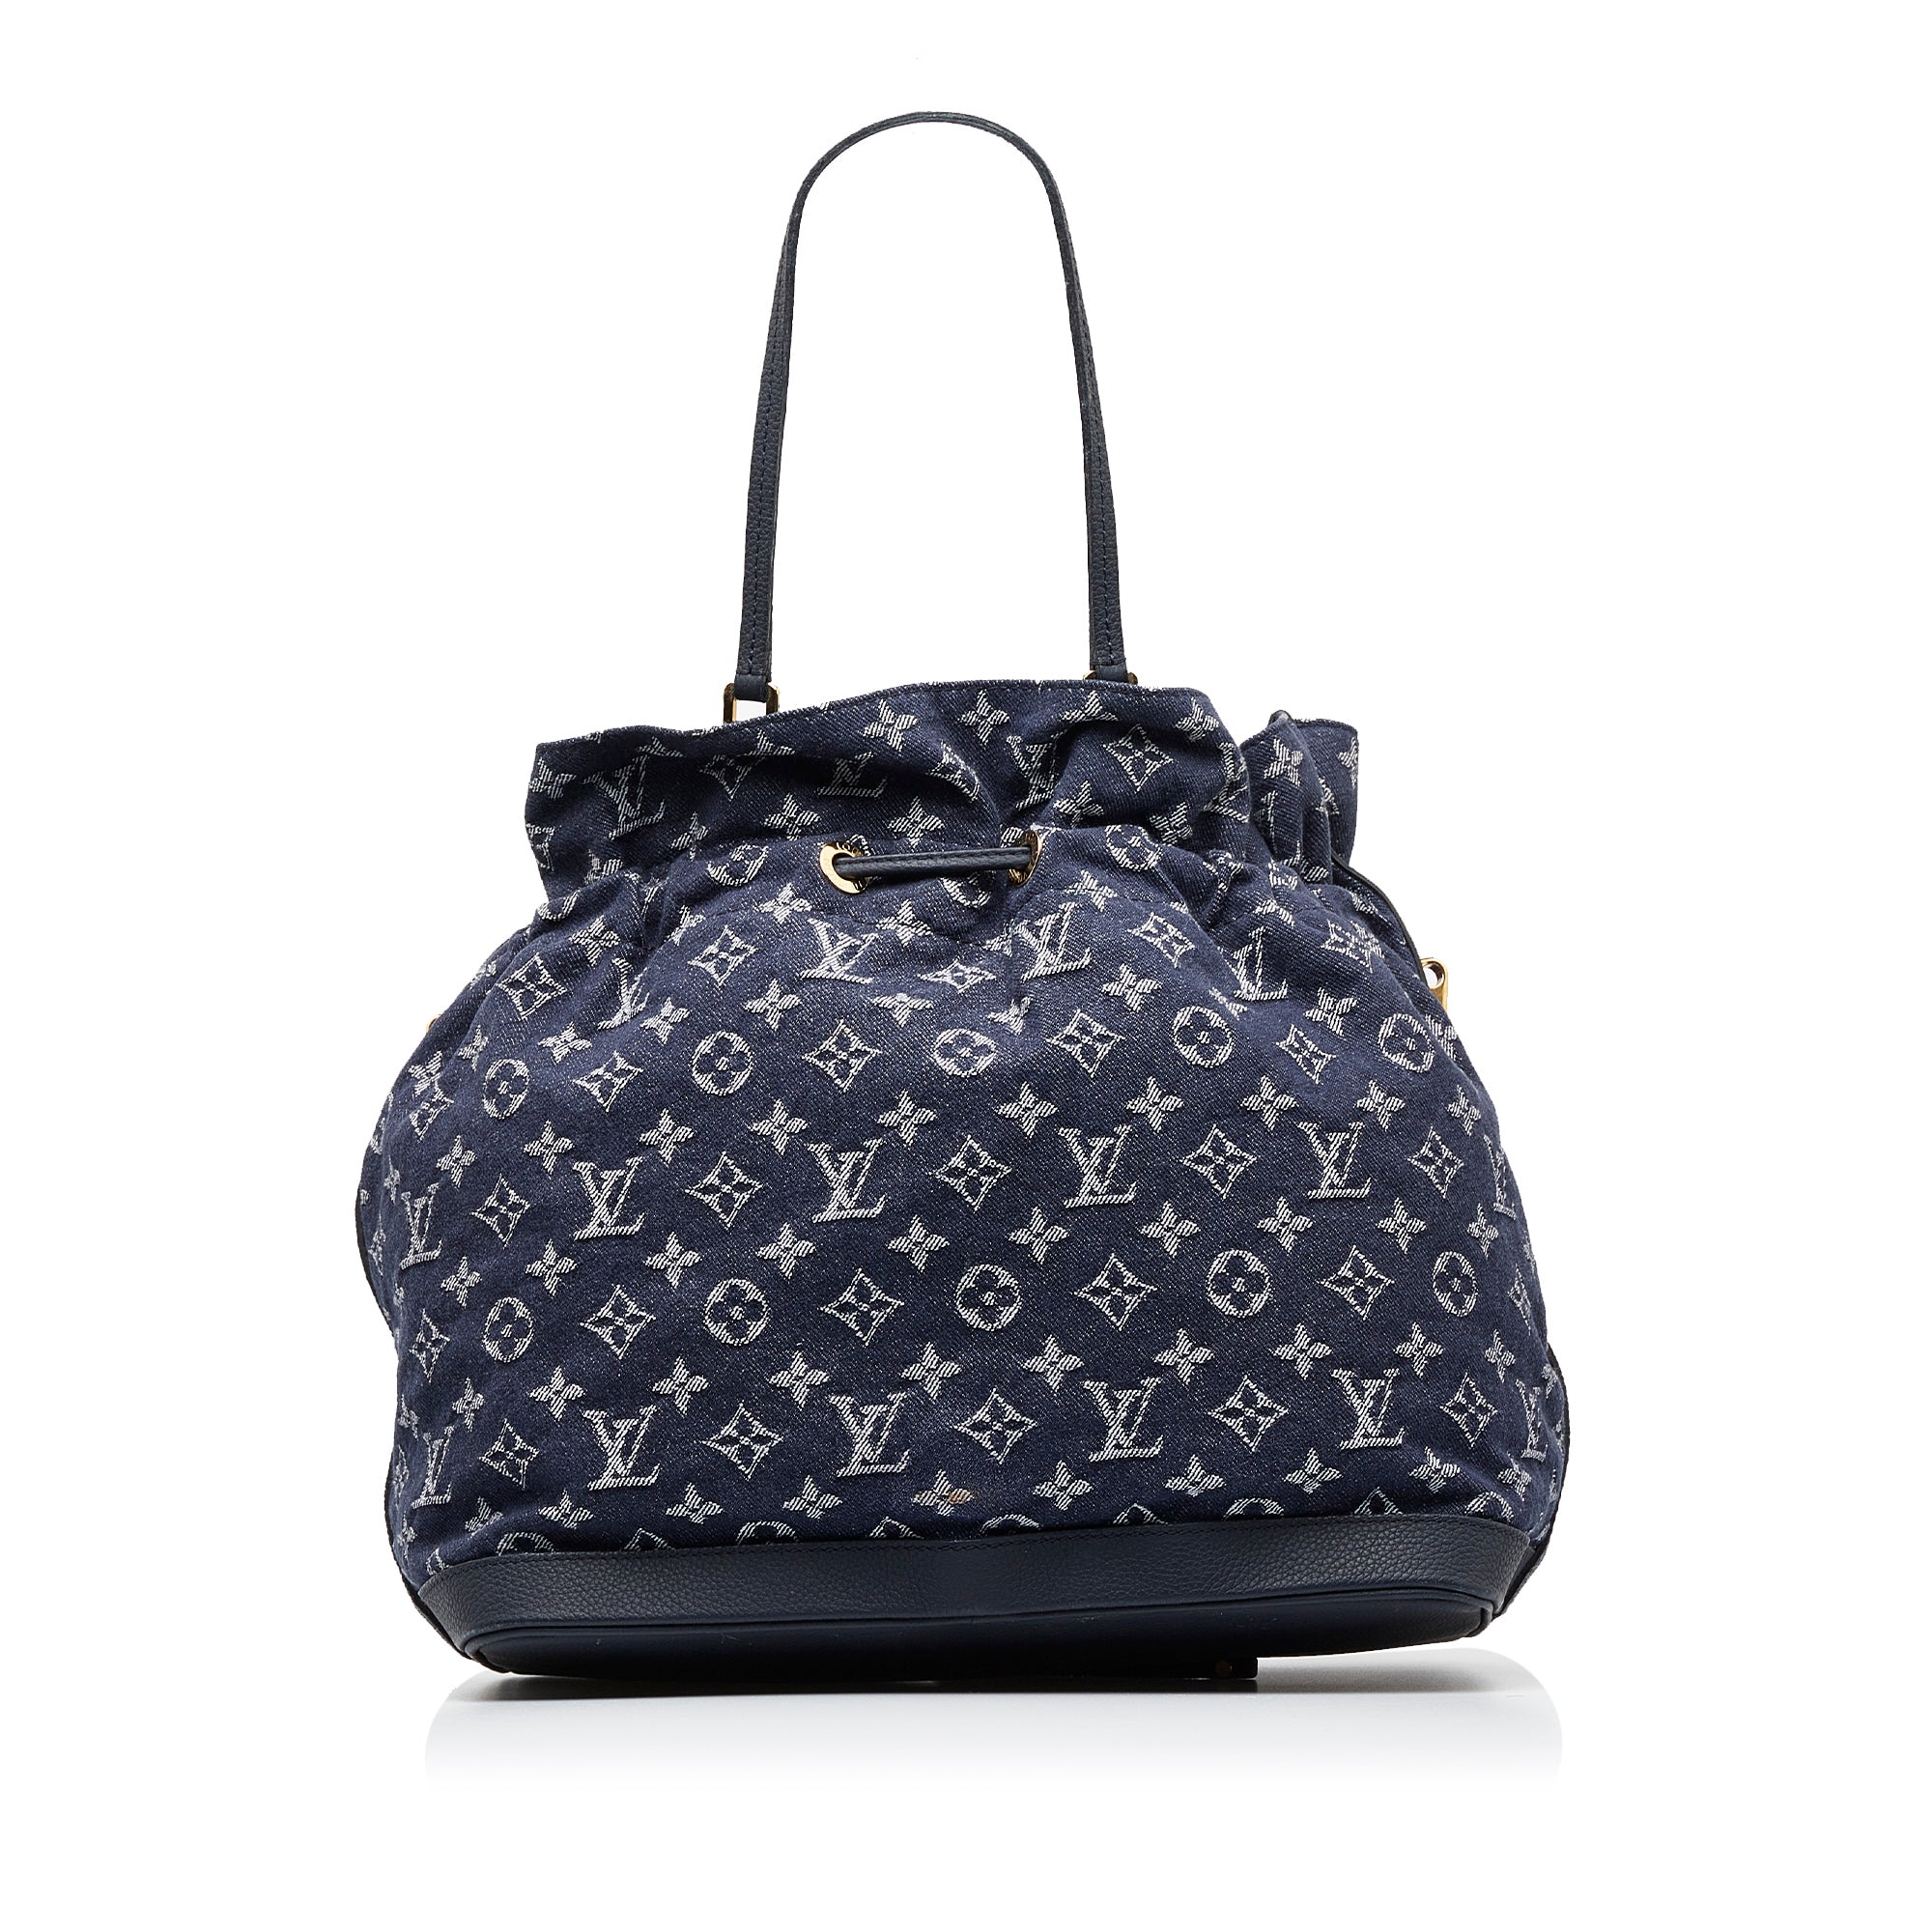 Louis Vuitton - Authenticated Manhattan Handbag - Denim - Jeans Blue for Women, Good Condition